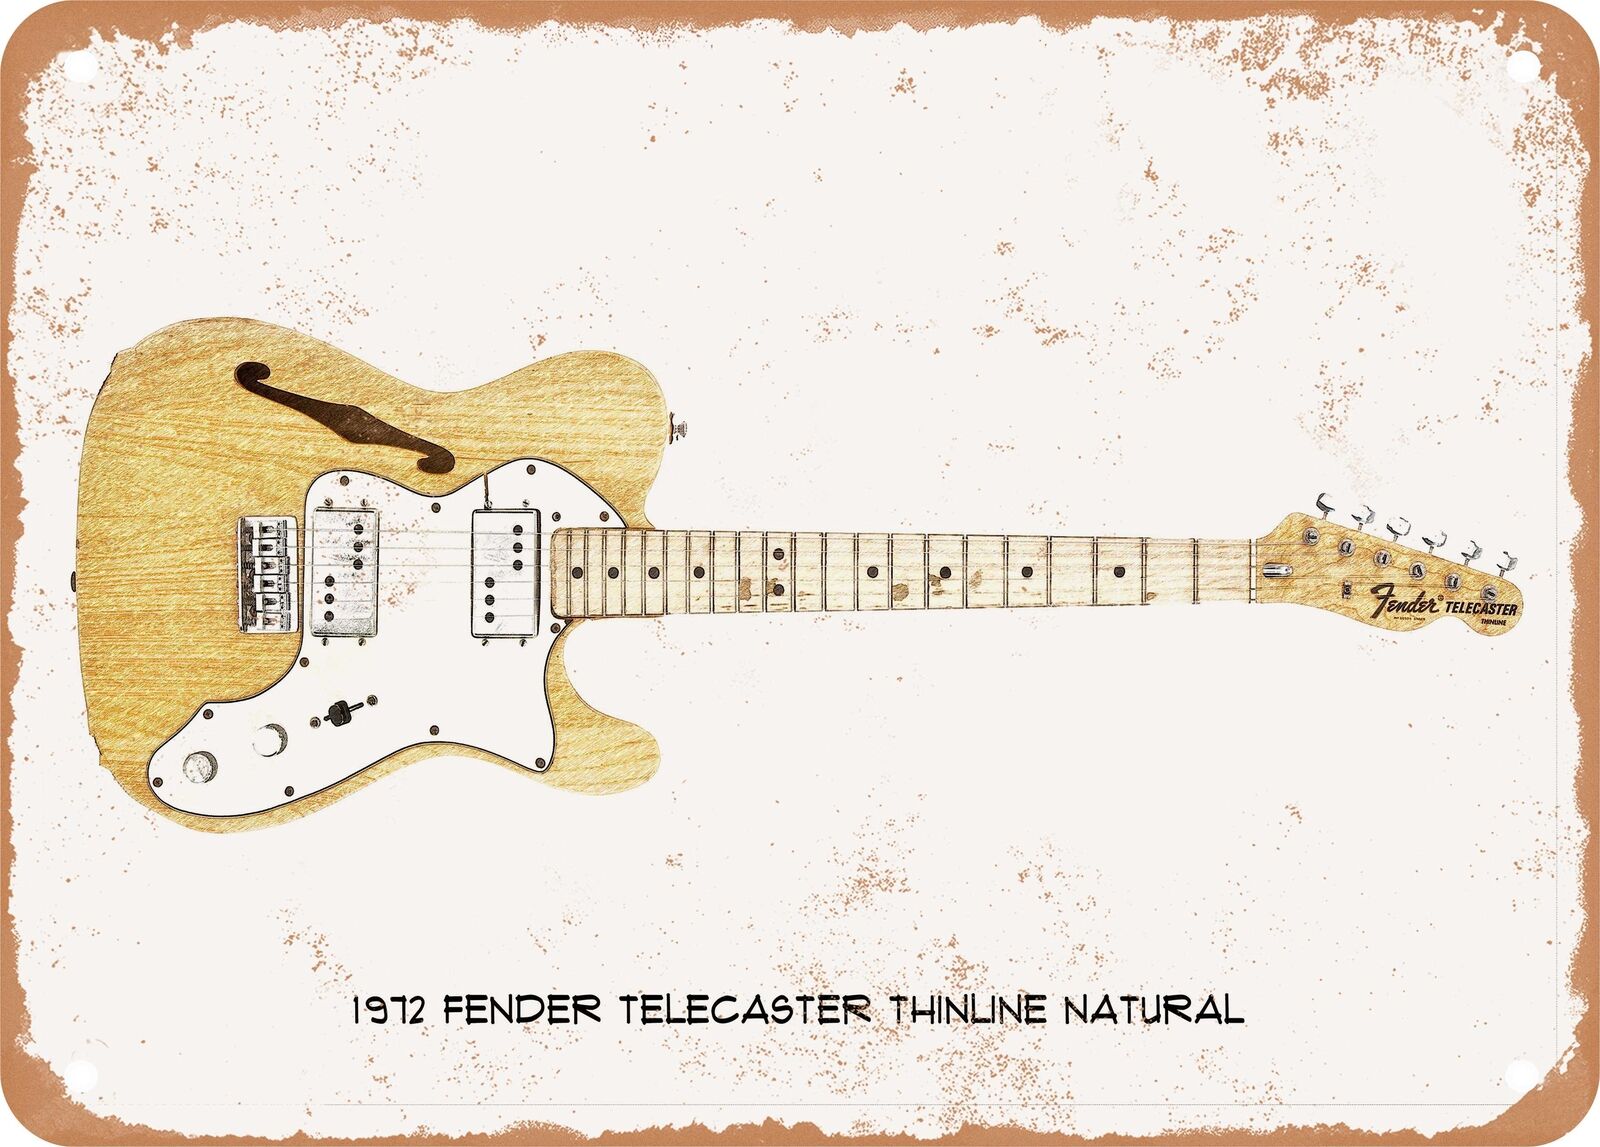 Guitar Art - 1972 Fender Tele Thinline Pencil Drawing - Rusty Look Metal Sign